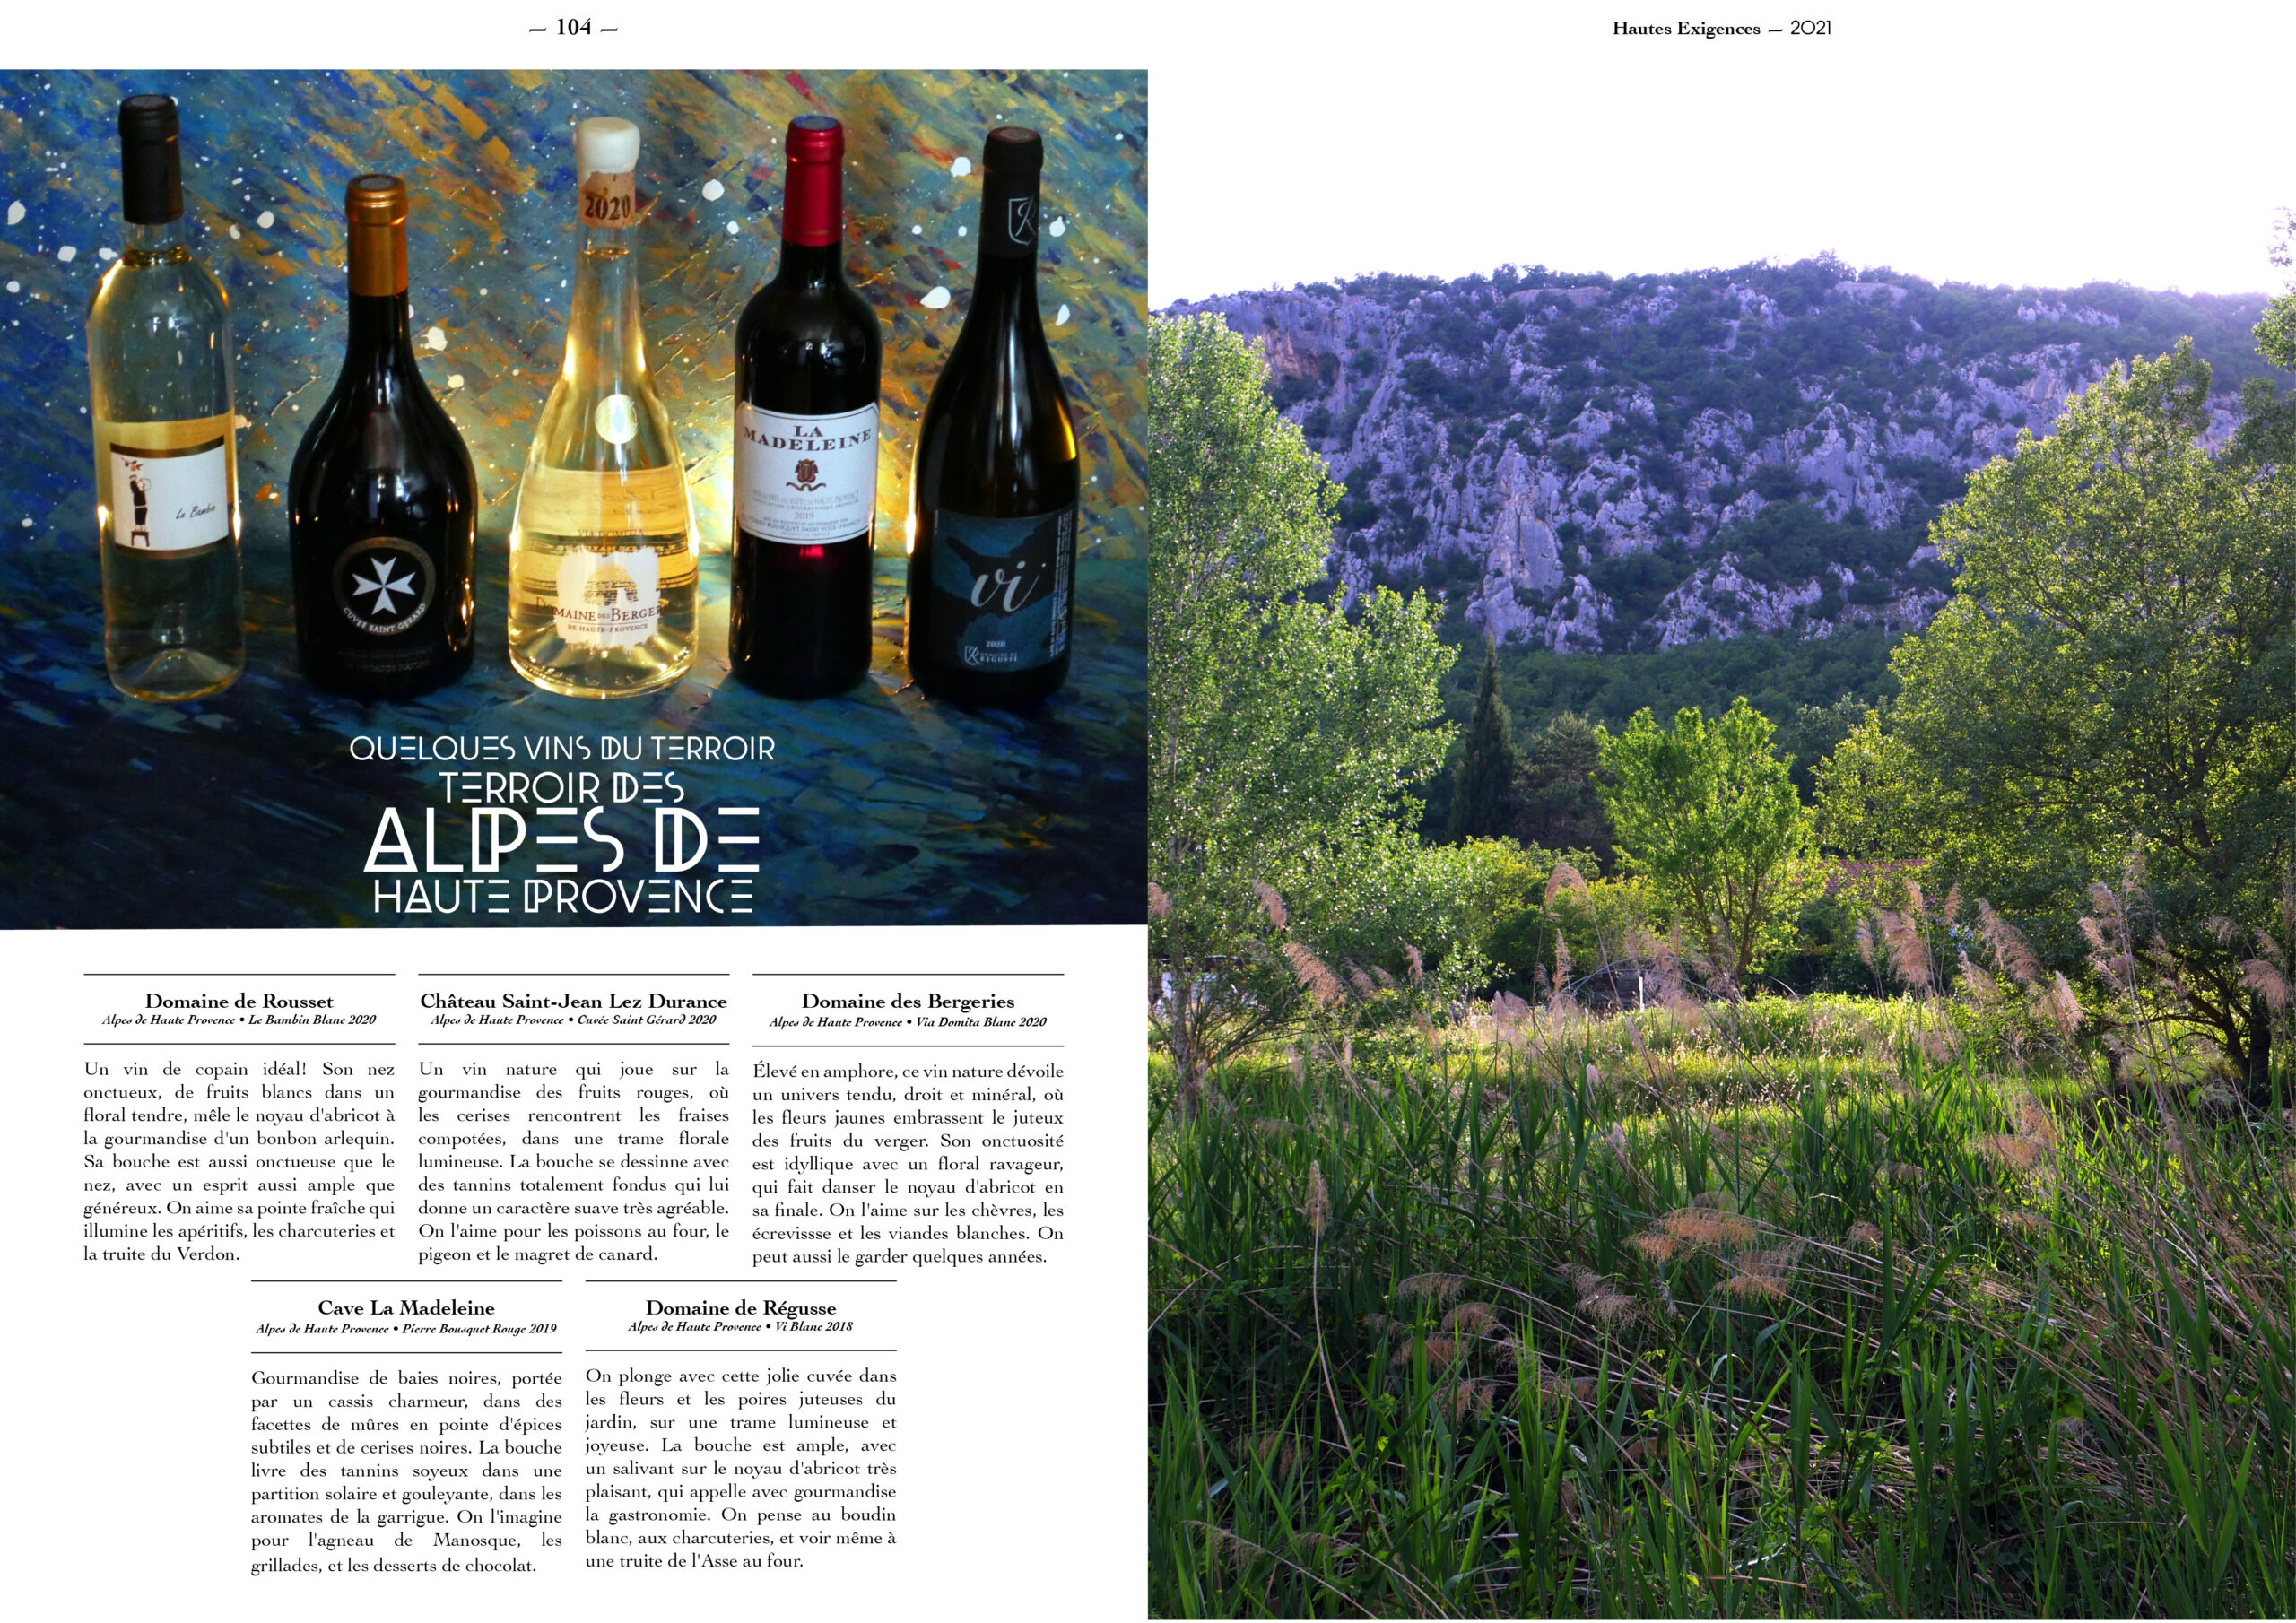 Hautes Exigences Magazine Hors Serie 2021 page 102-103